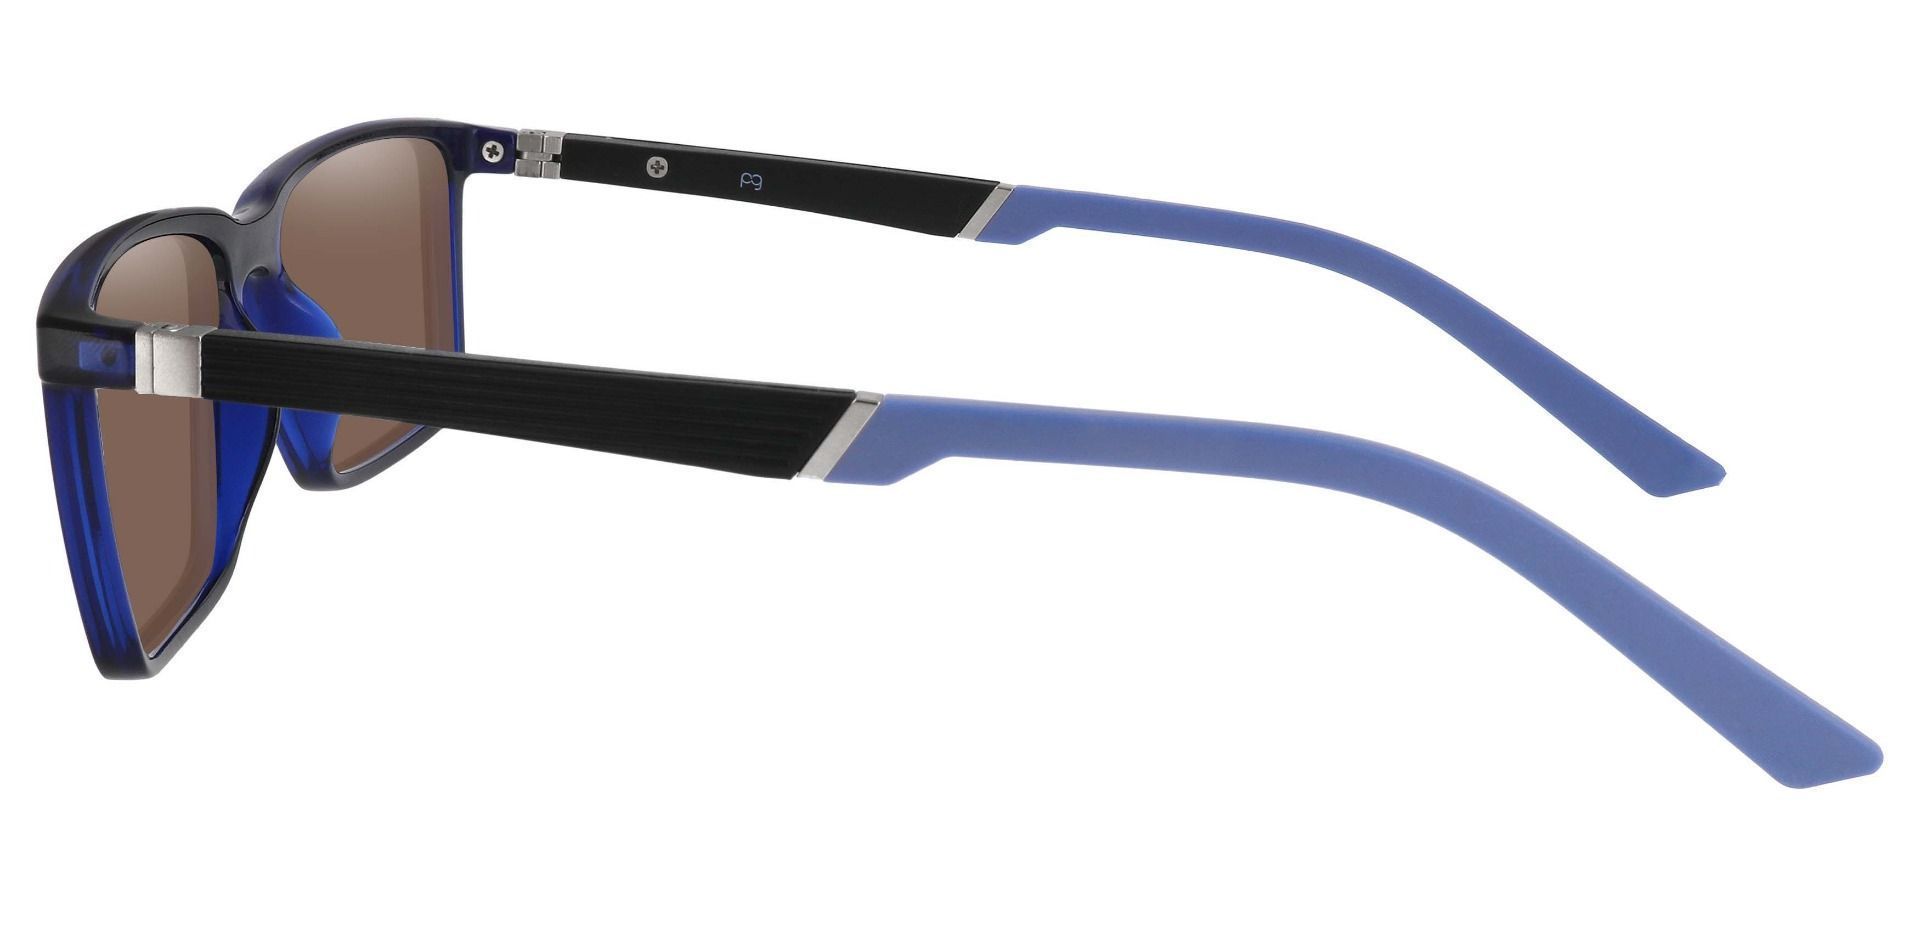 Hawk Rectangle Prescription Sunglasses - Blue Frame With Brown Lenses